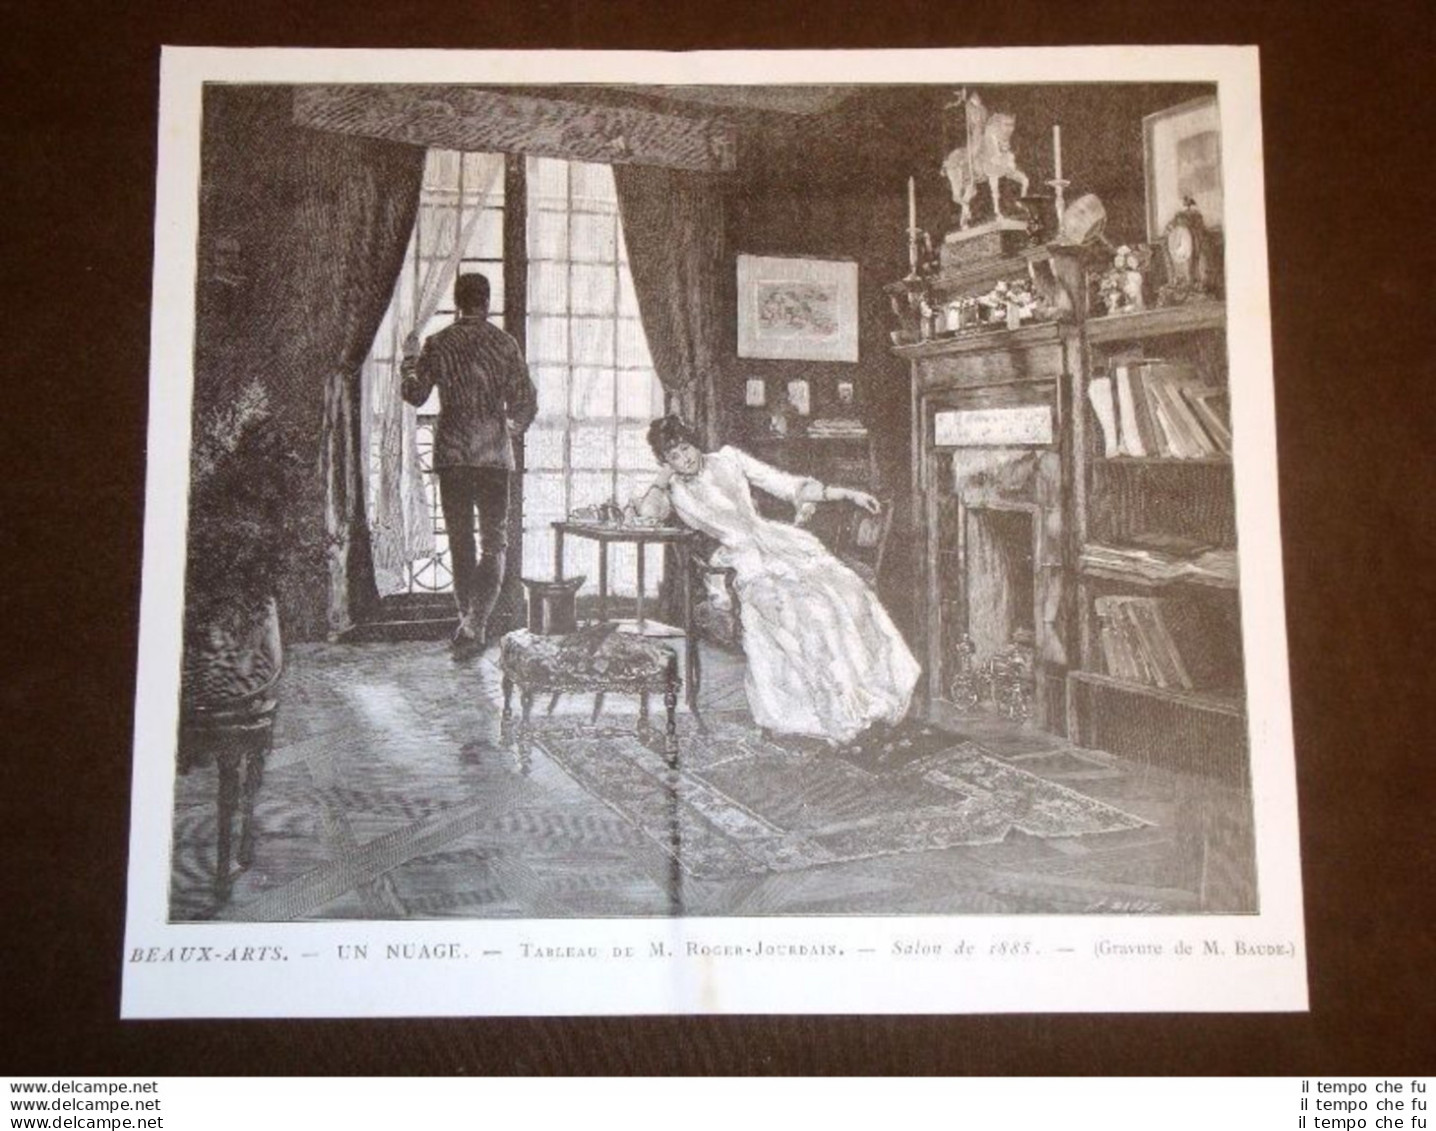 Un Nuage Tableau De M. Roger - Jourdain Salon De 1885 Gravure De M. Baude - Ante 1900